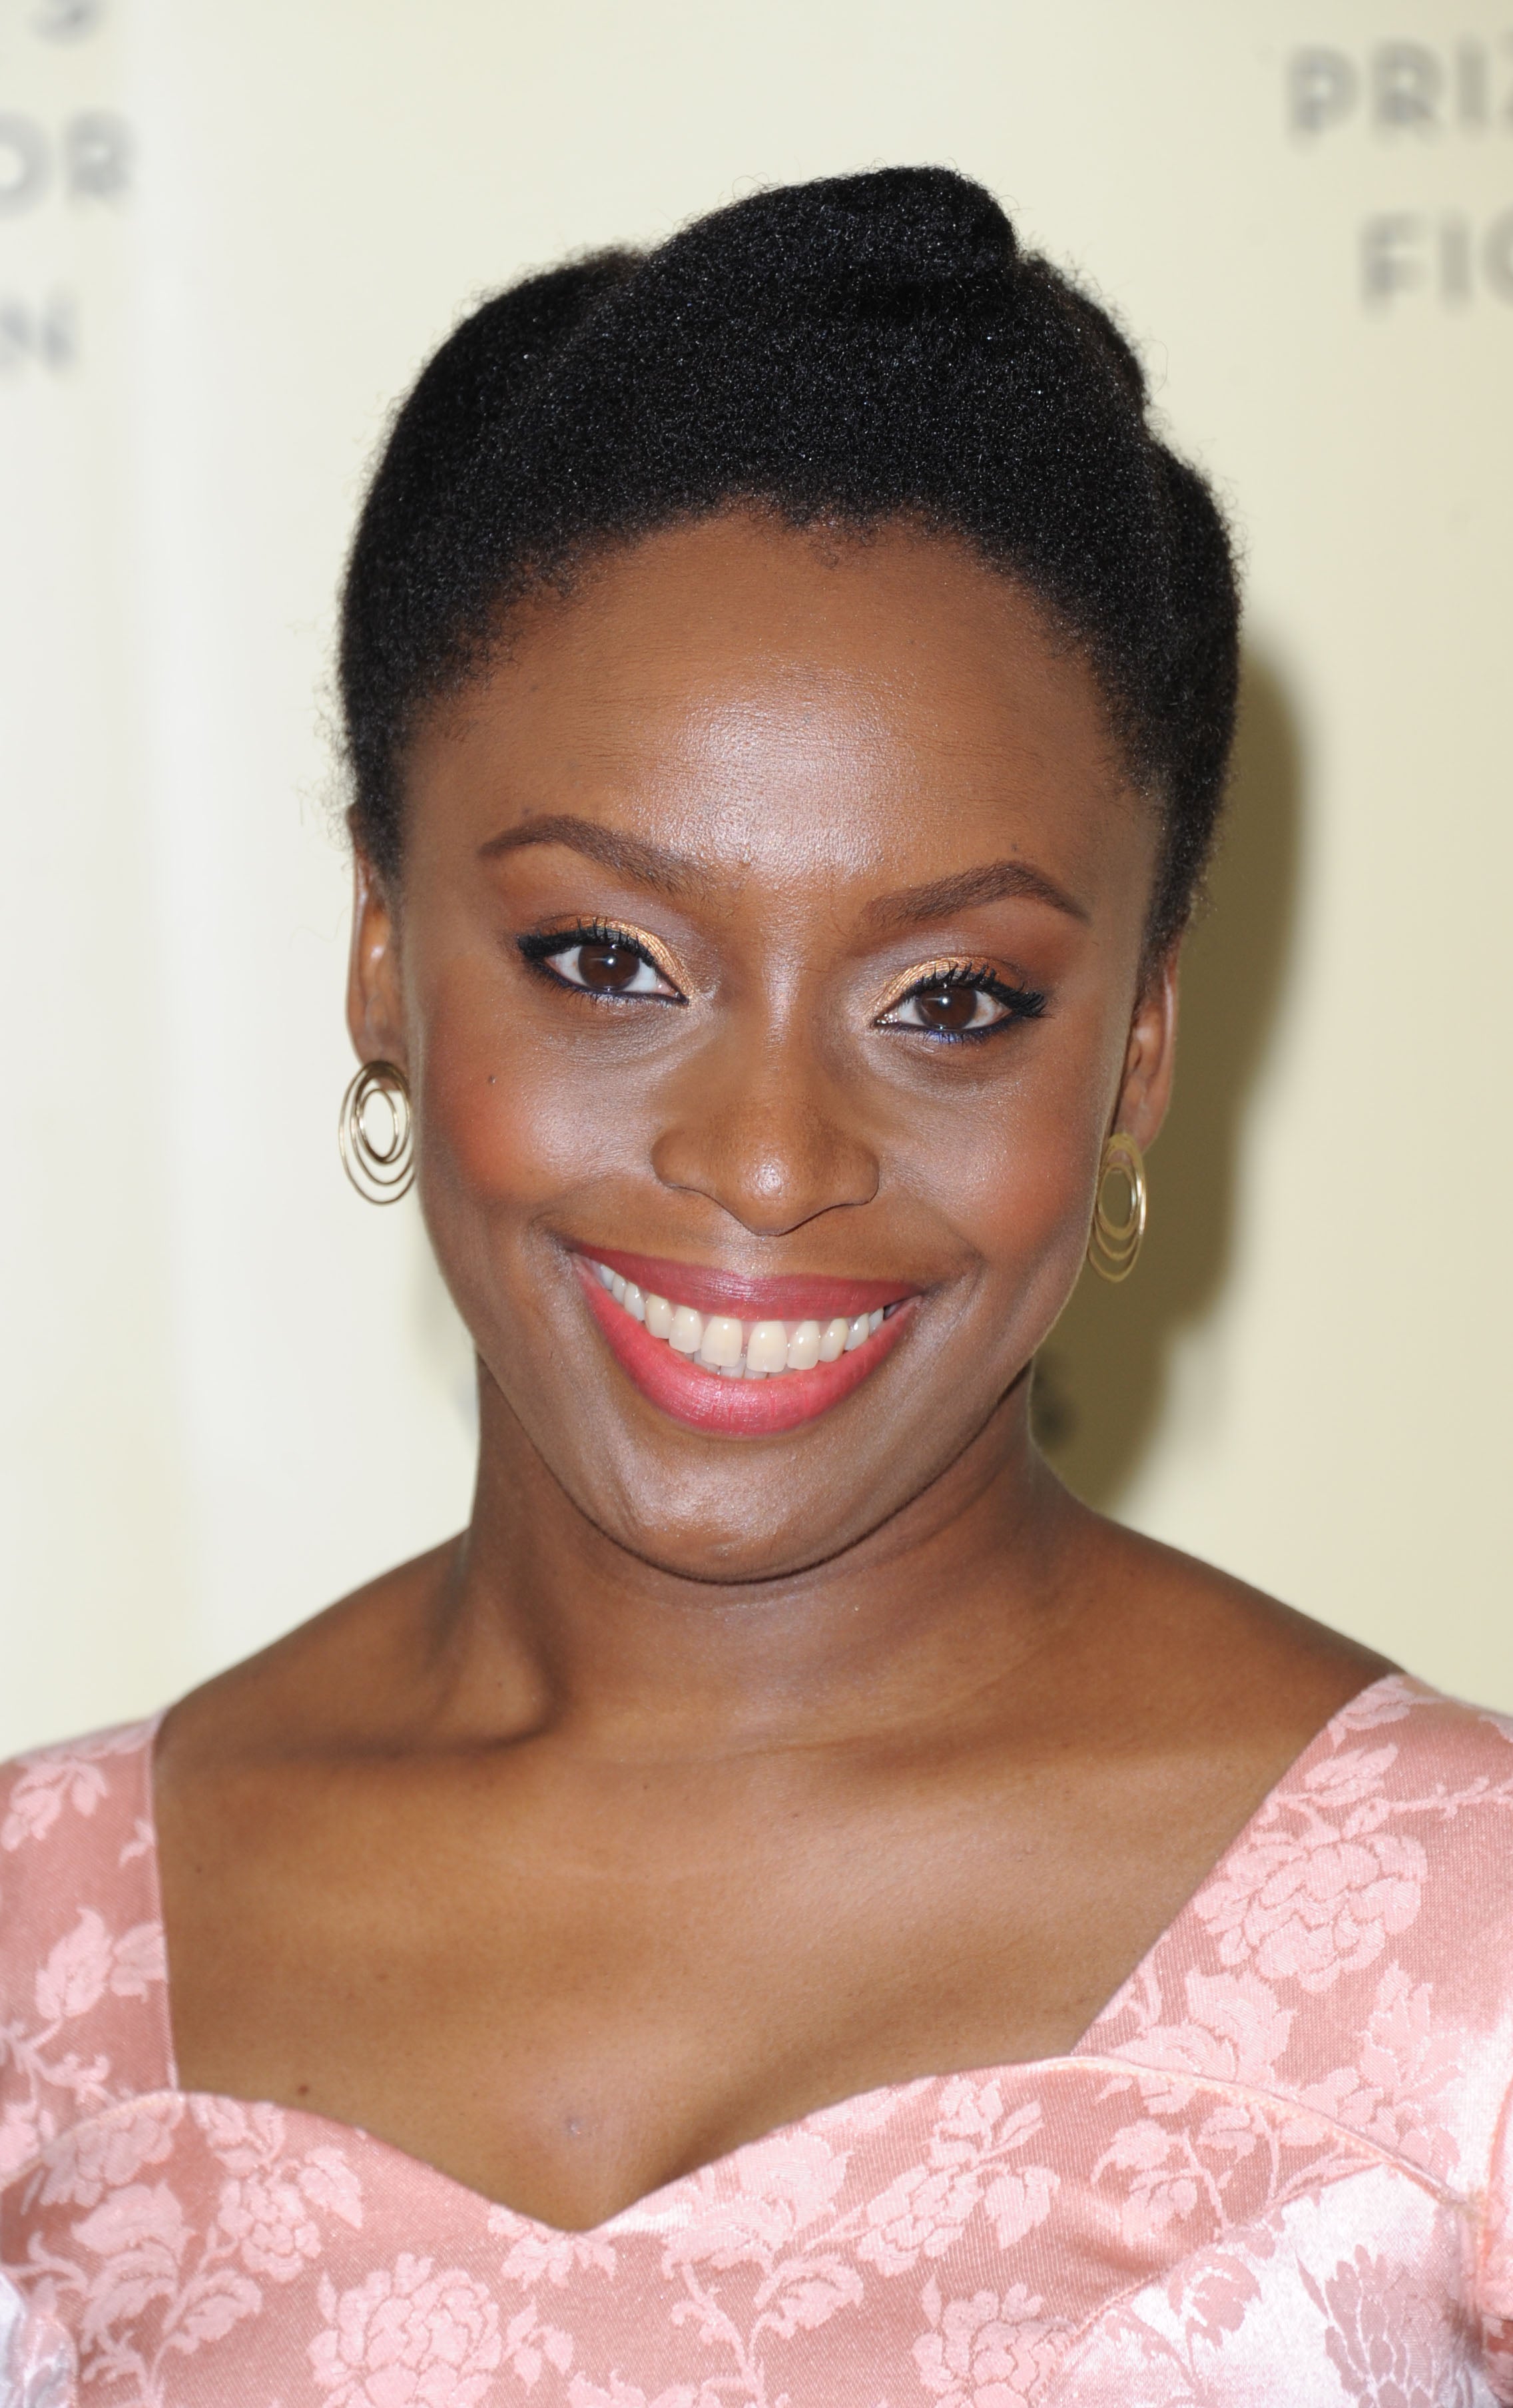 Dear Ijeawele, or A Feminist Manifesto in Fifteen Suggestions by Chimamanda Ngozi Adichie